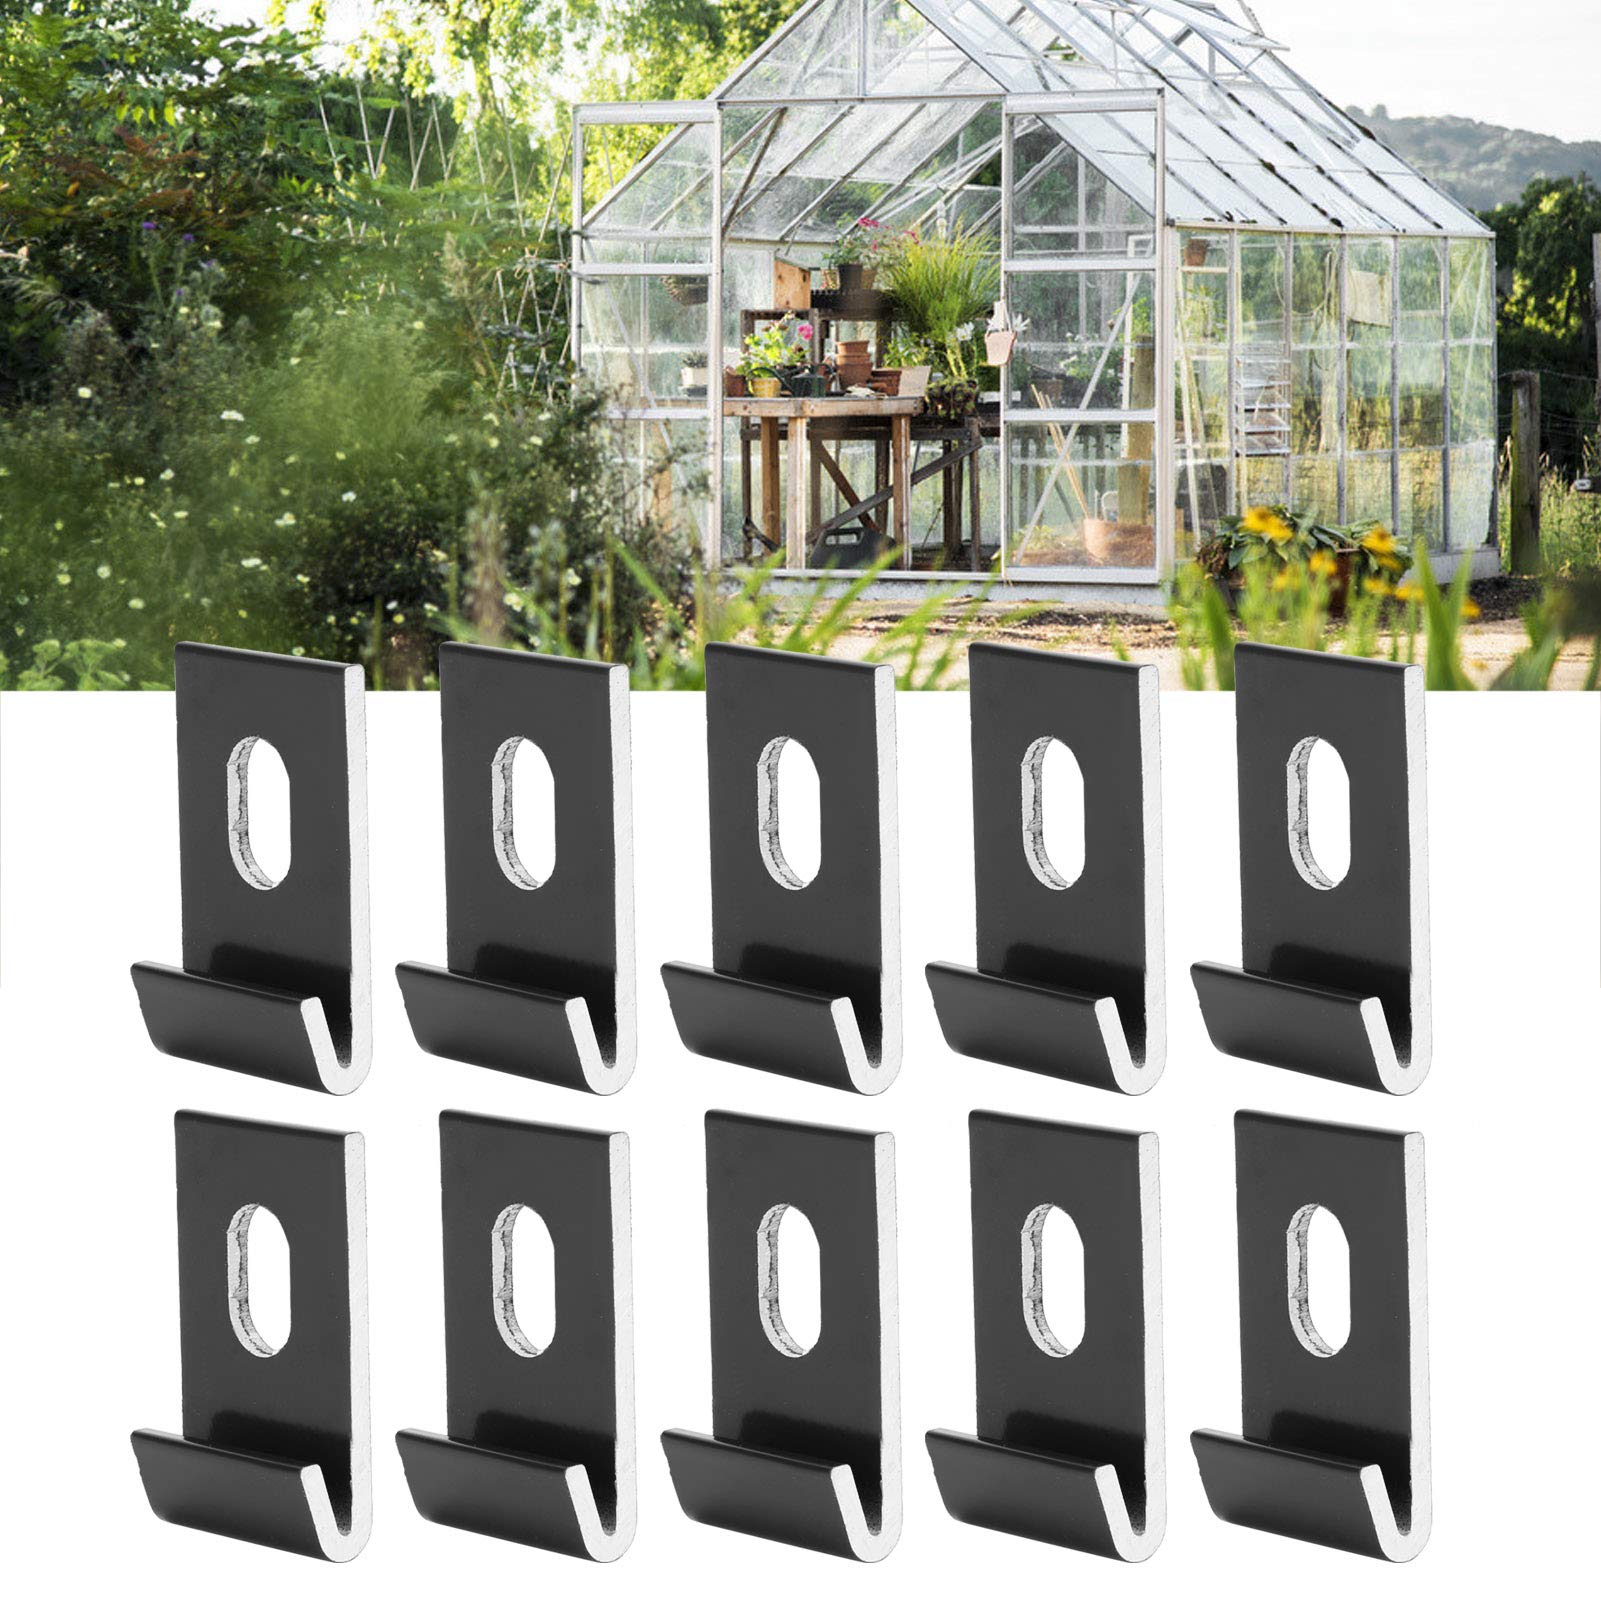 10Pcs Base Clips Hook Fixings Attaches Aluminium Greenhouses Fixture Set WearResistant Base Clips(black)